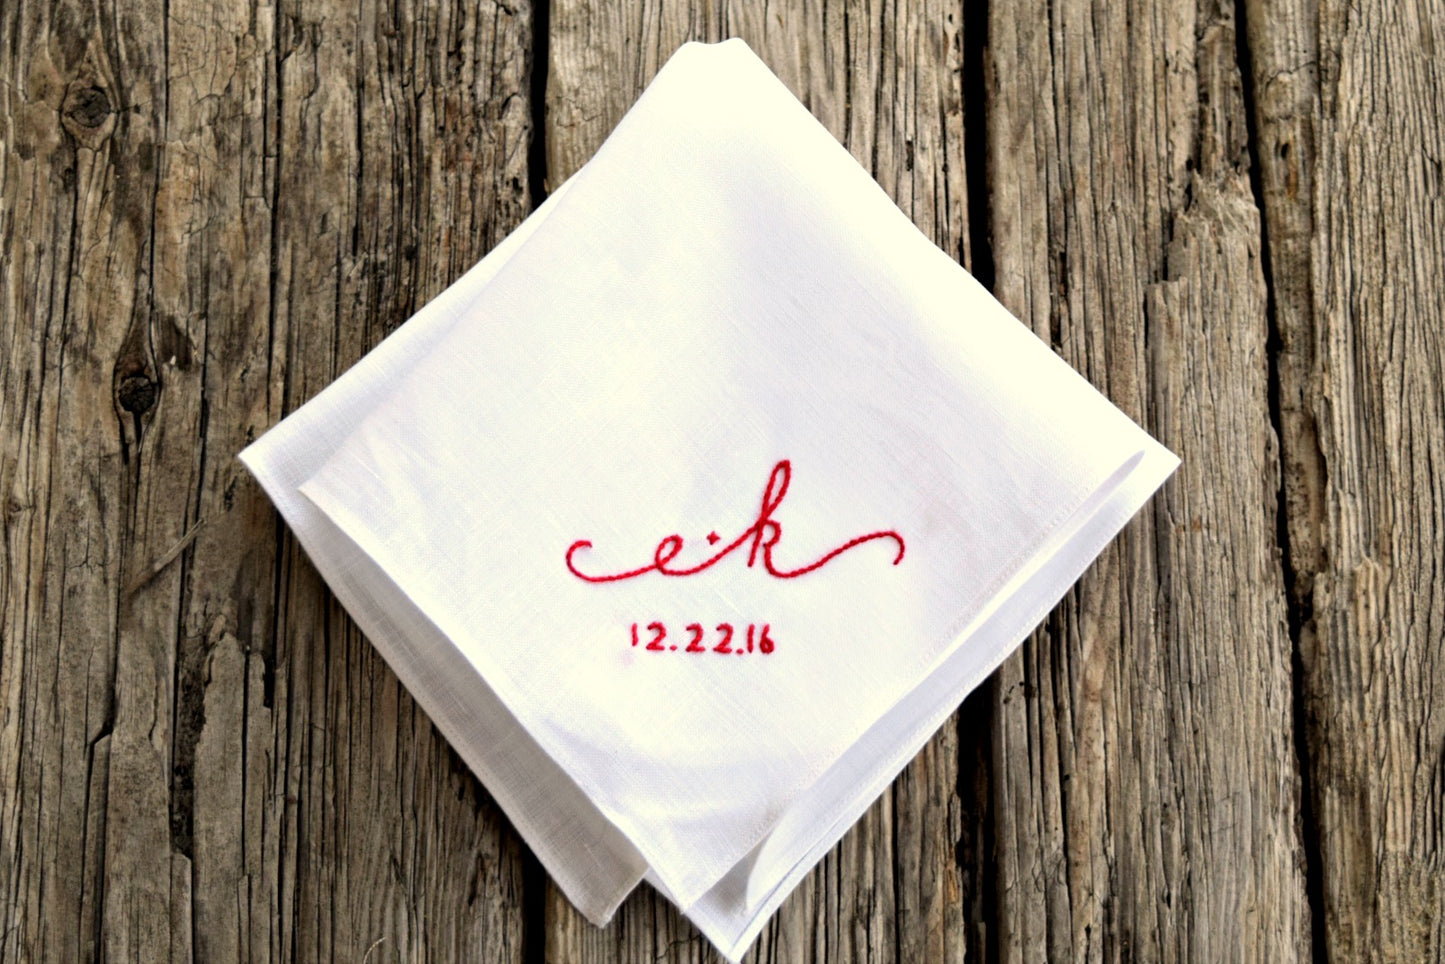 Sweetheart Handkerchief with Wedding Date : Casual Elegance